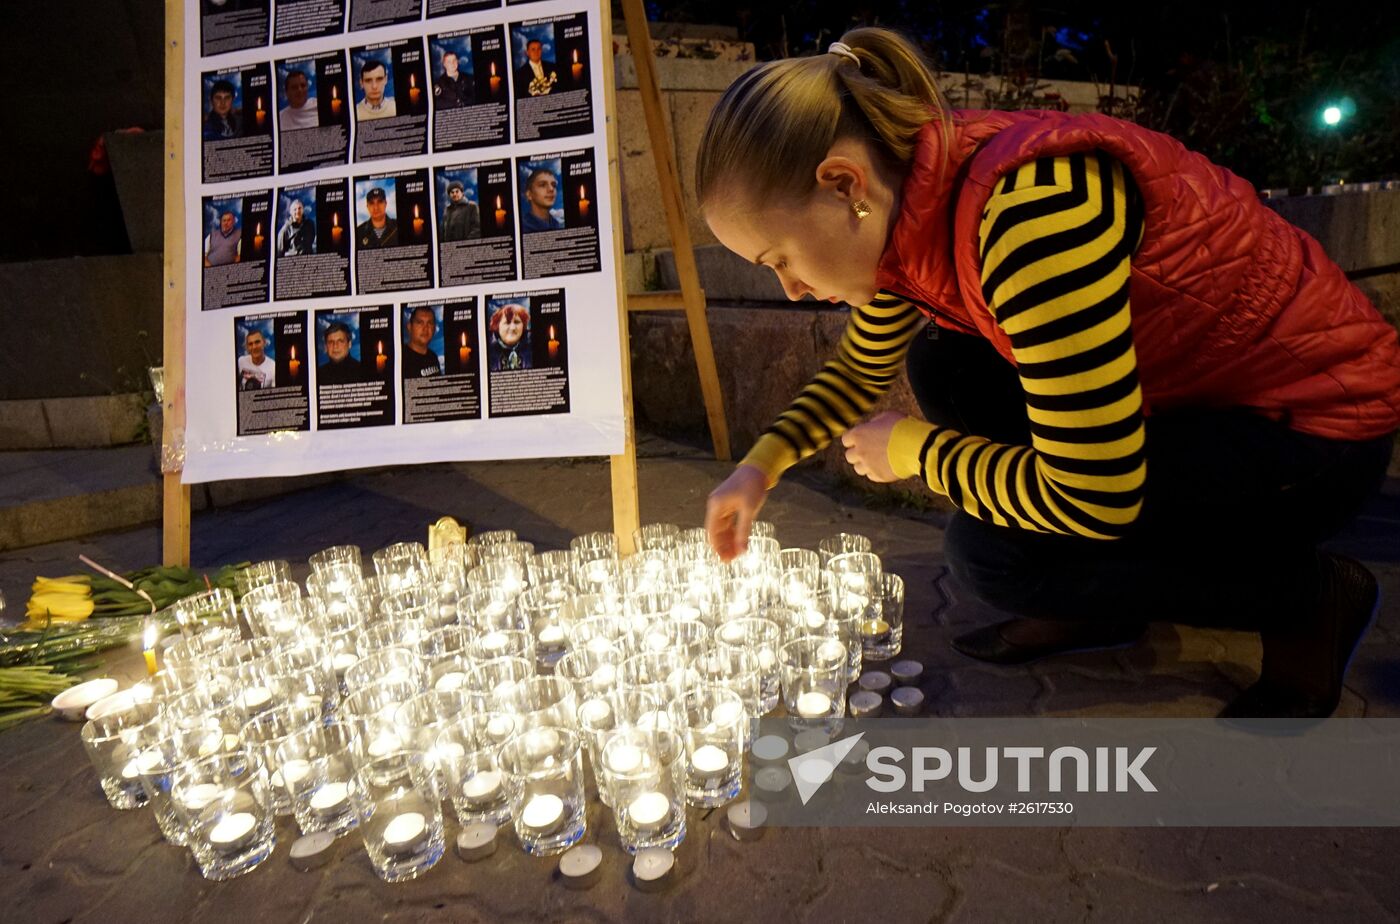 Odessa May 2 tragedy memorials in Russia